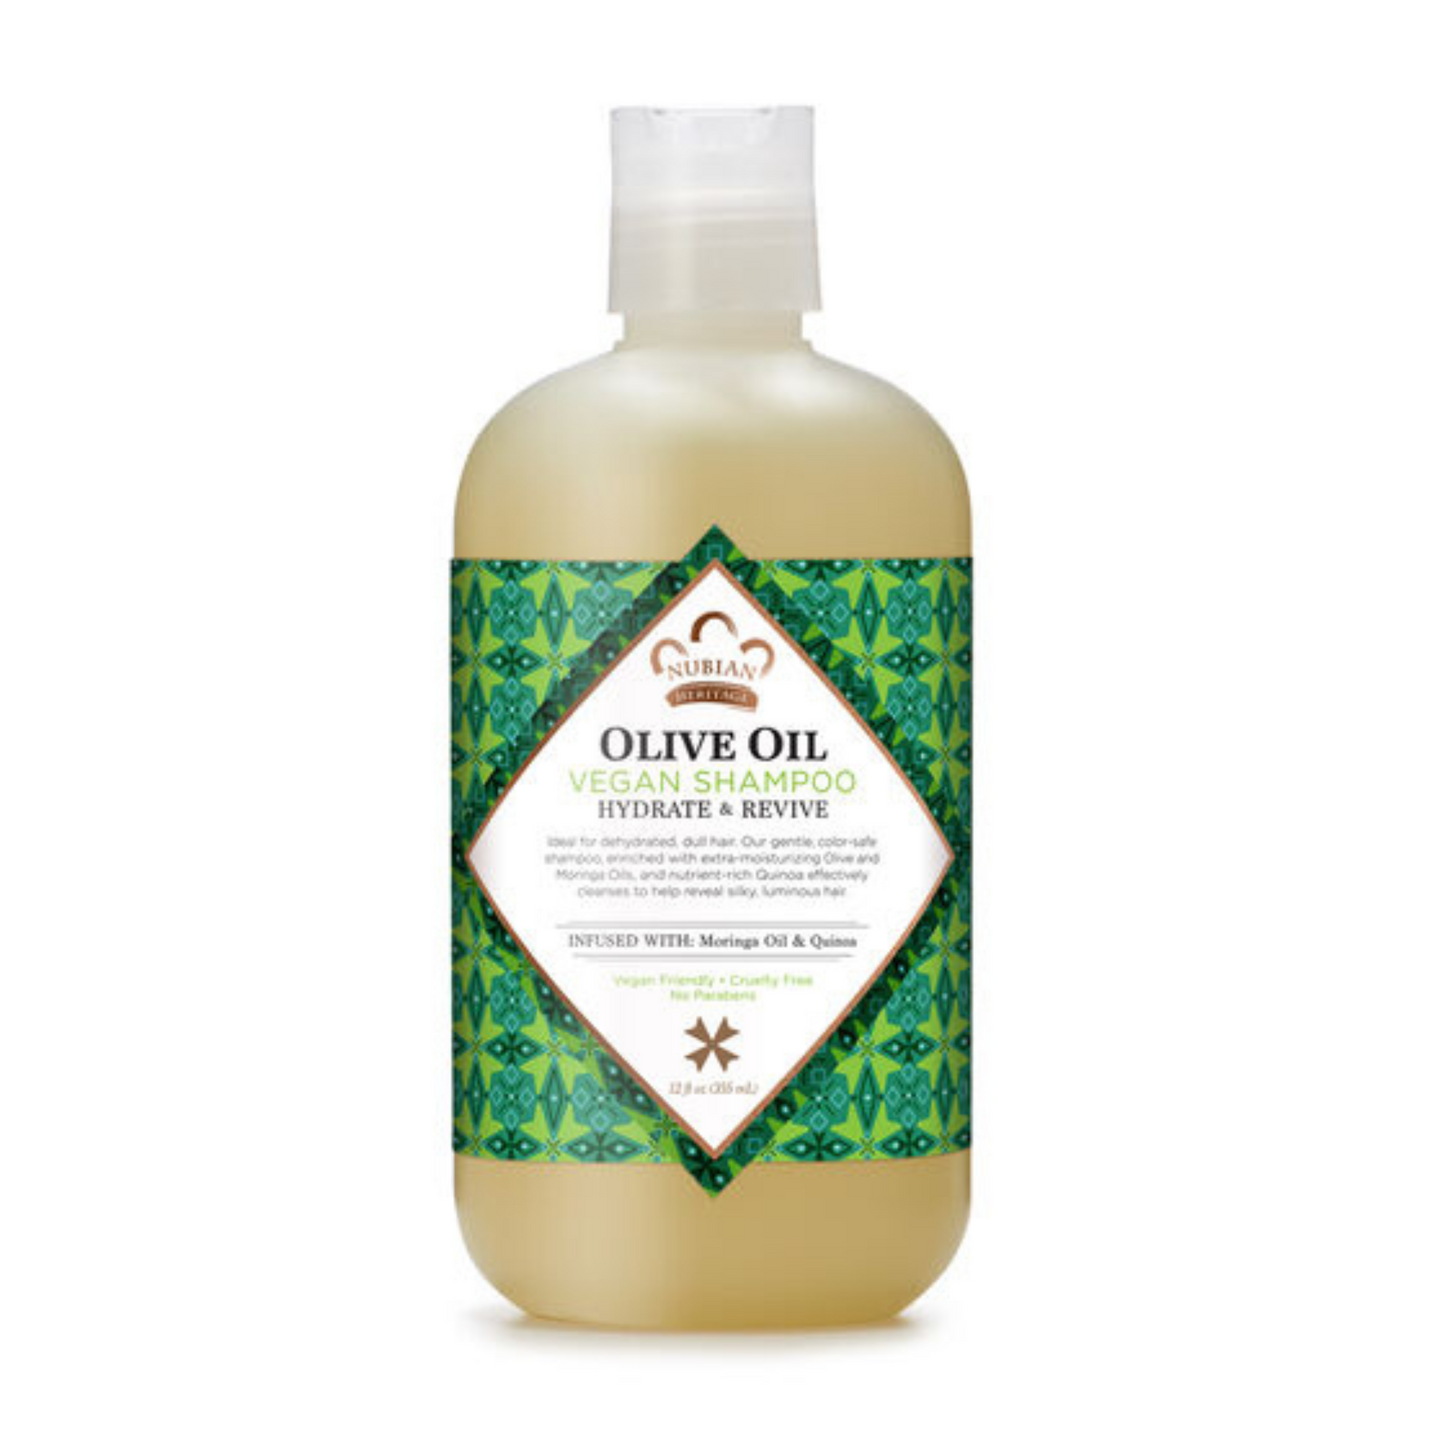 Primary Image of Nubian Heritage Olive Oil Vegan Shampoo (12 fl oz)